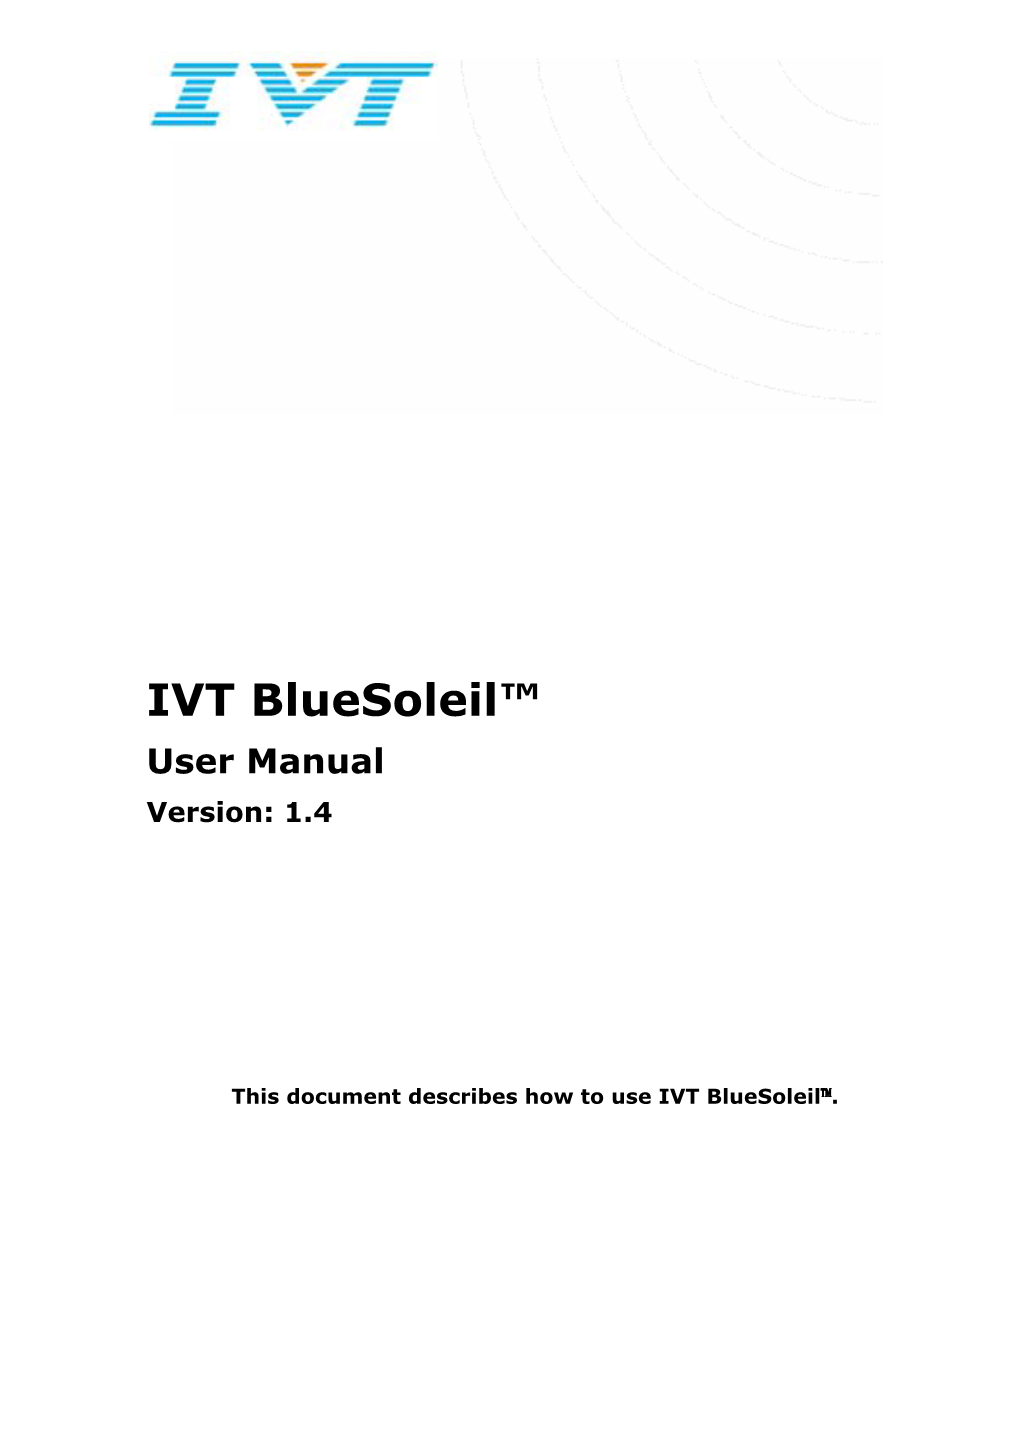 IVT Bluesoleil™ User Manual Version: 1.4